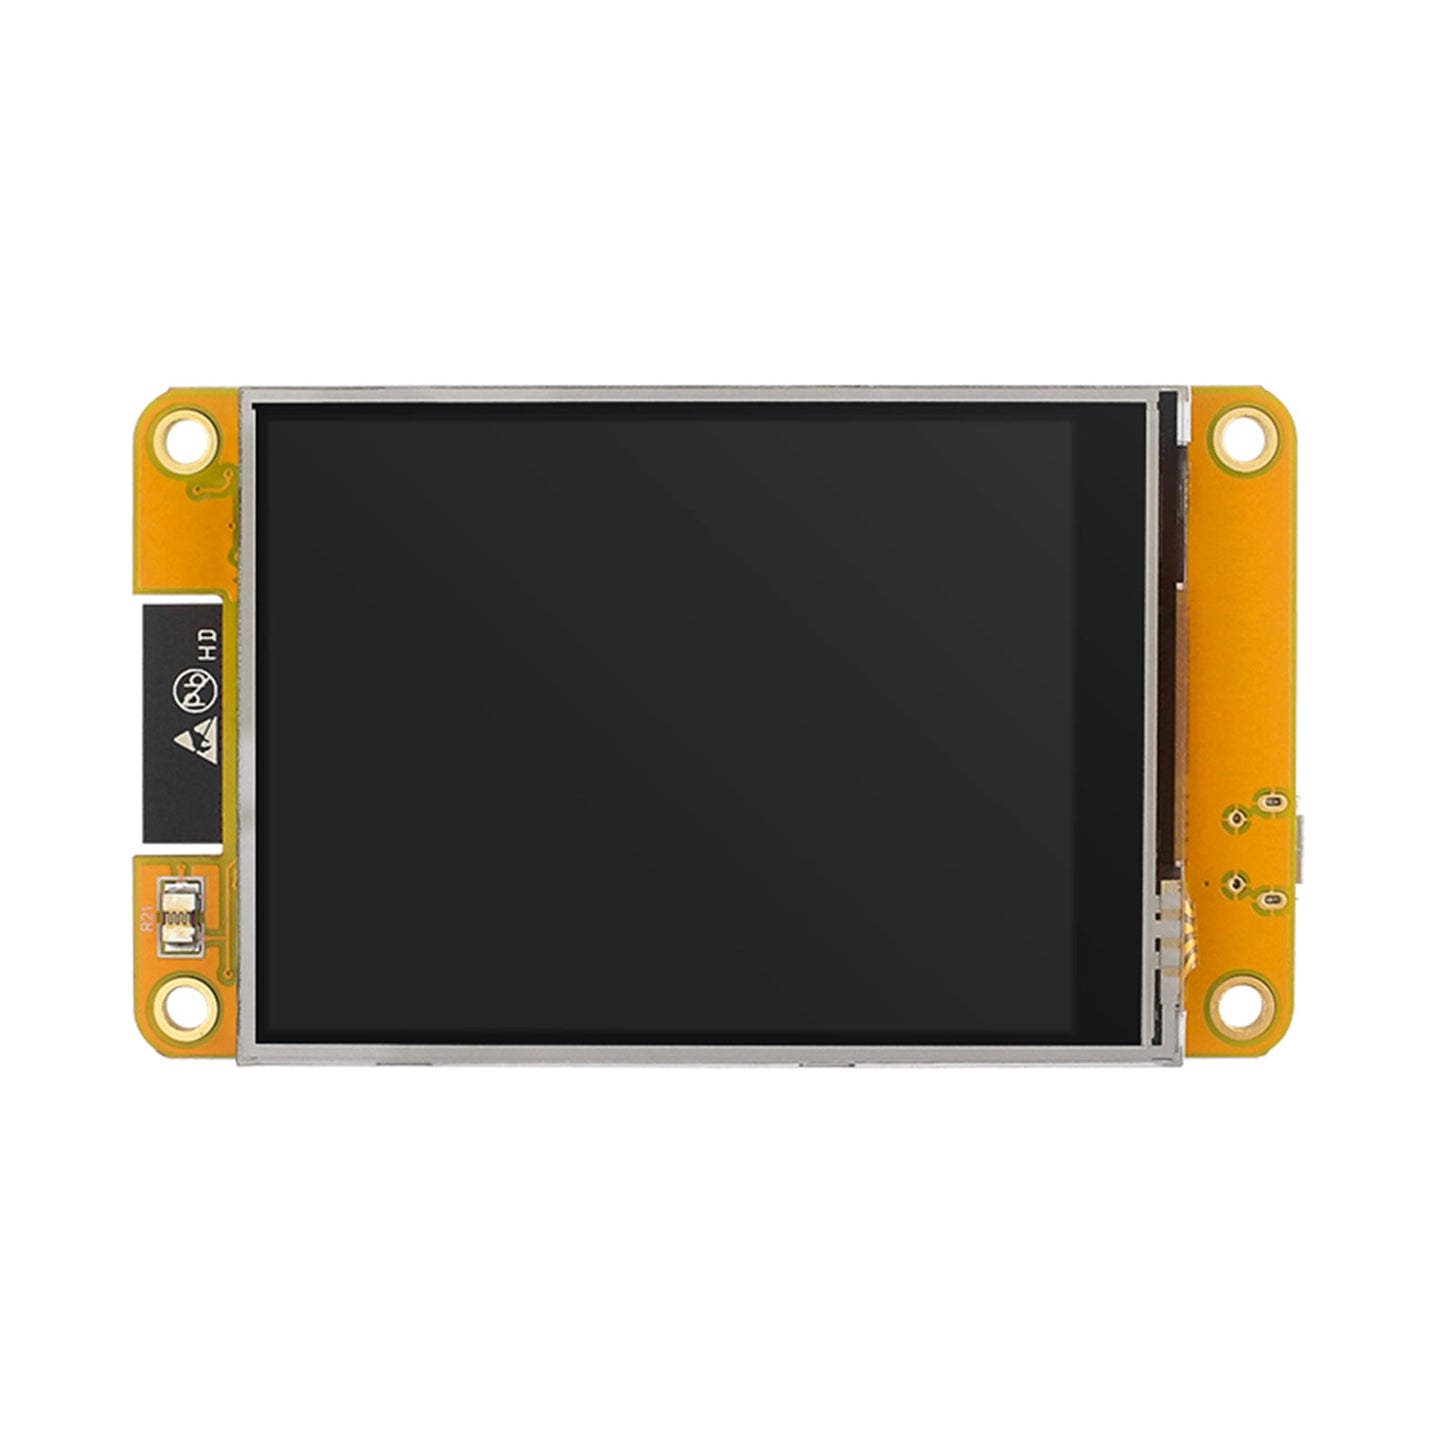 ESP32 Entwicklungsboard WiFi Bluetooth 2,8" 240*320 Display Touchscreen LVGL